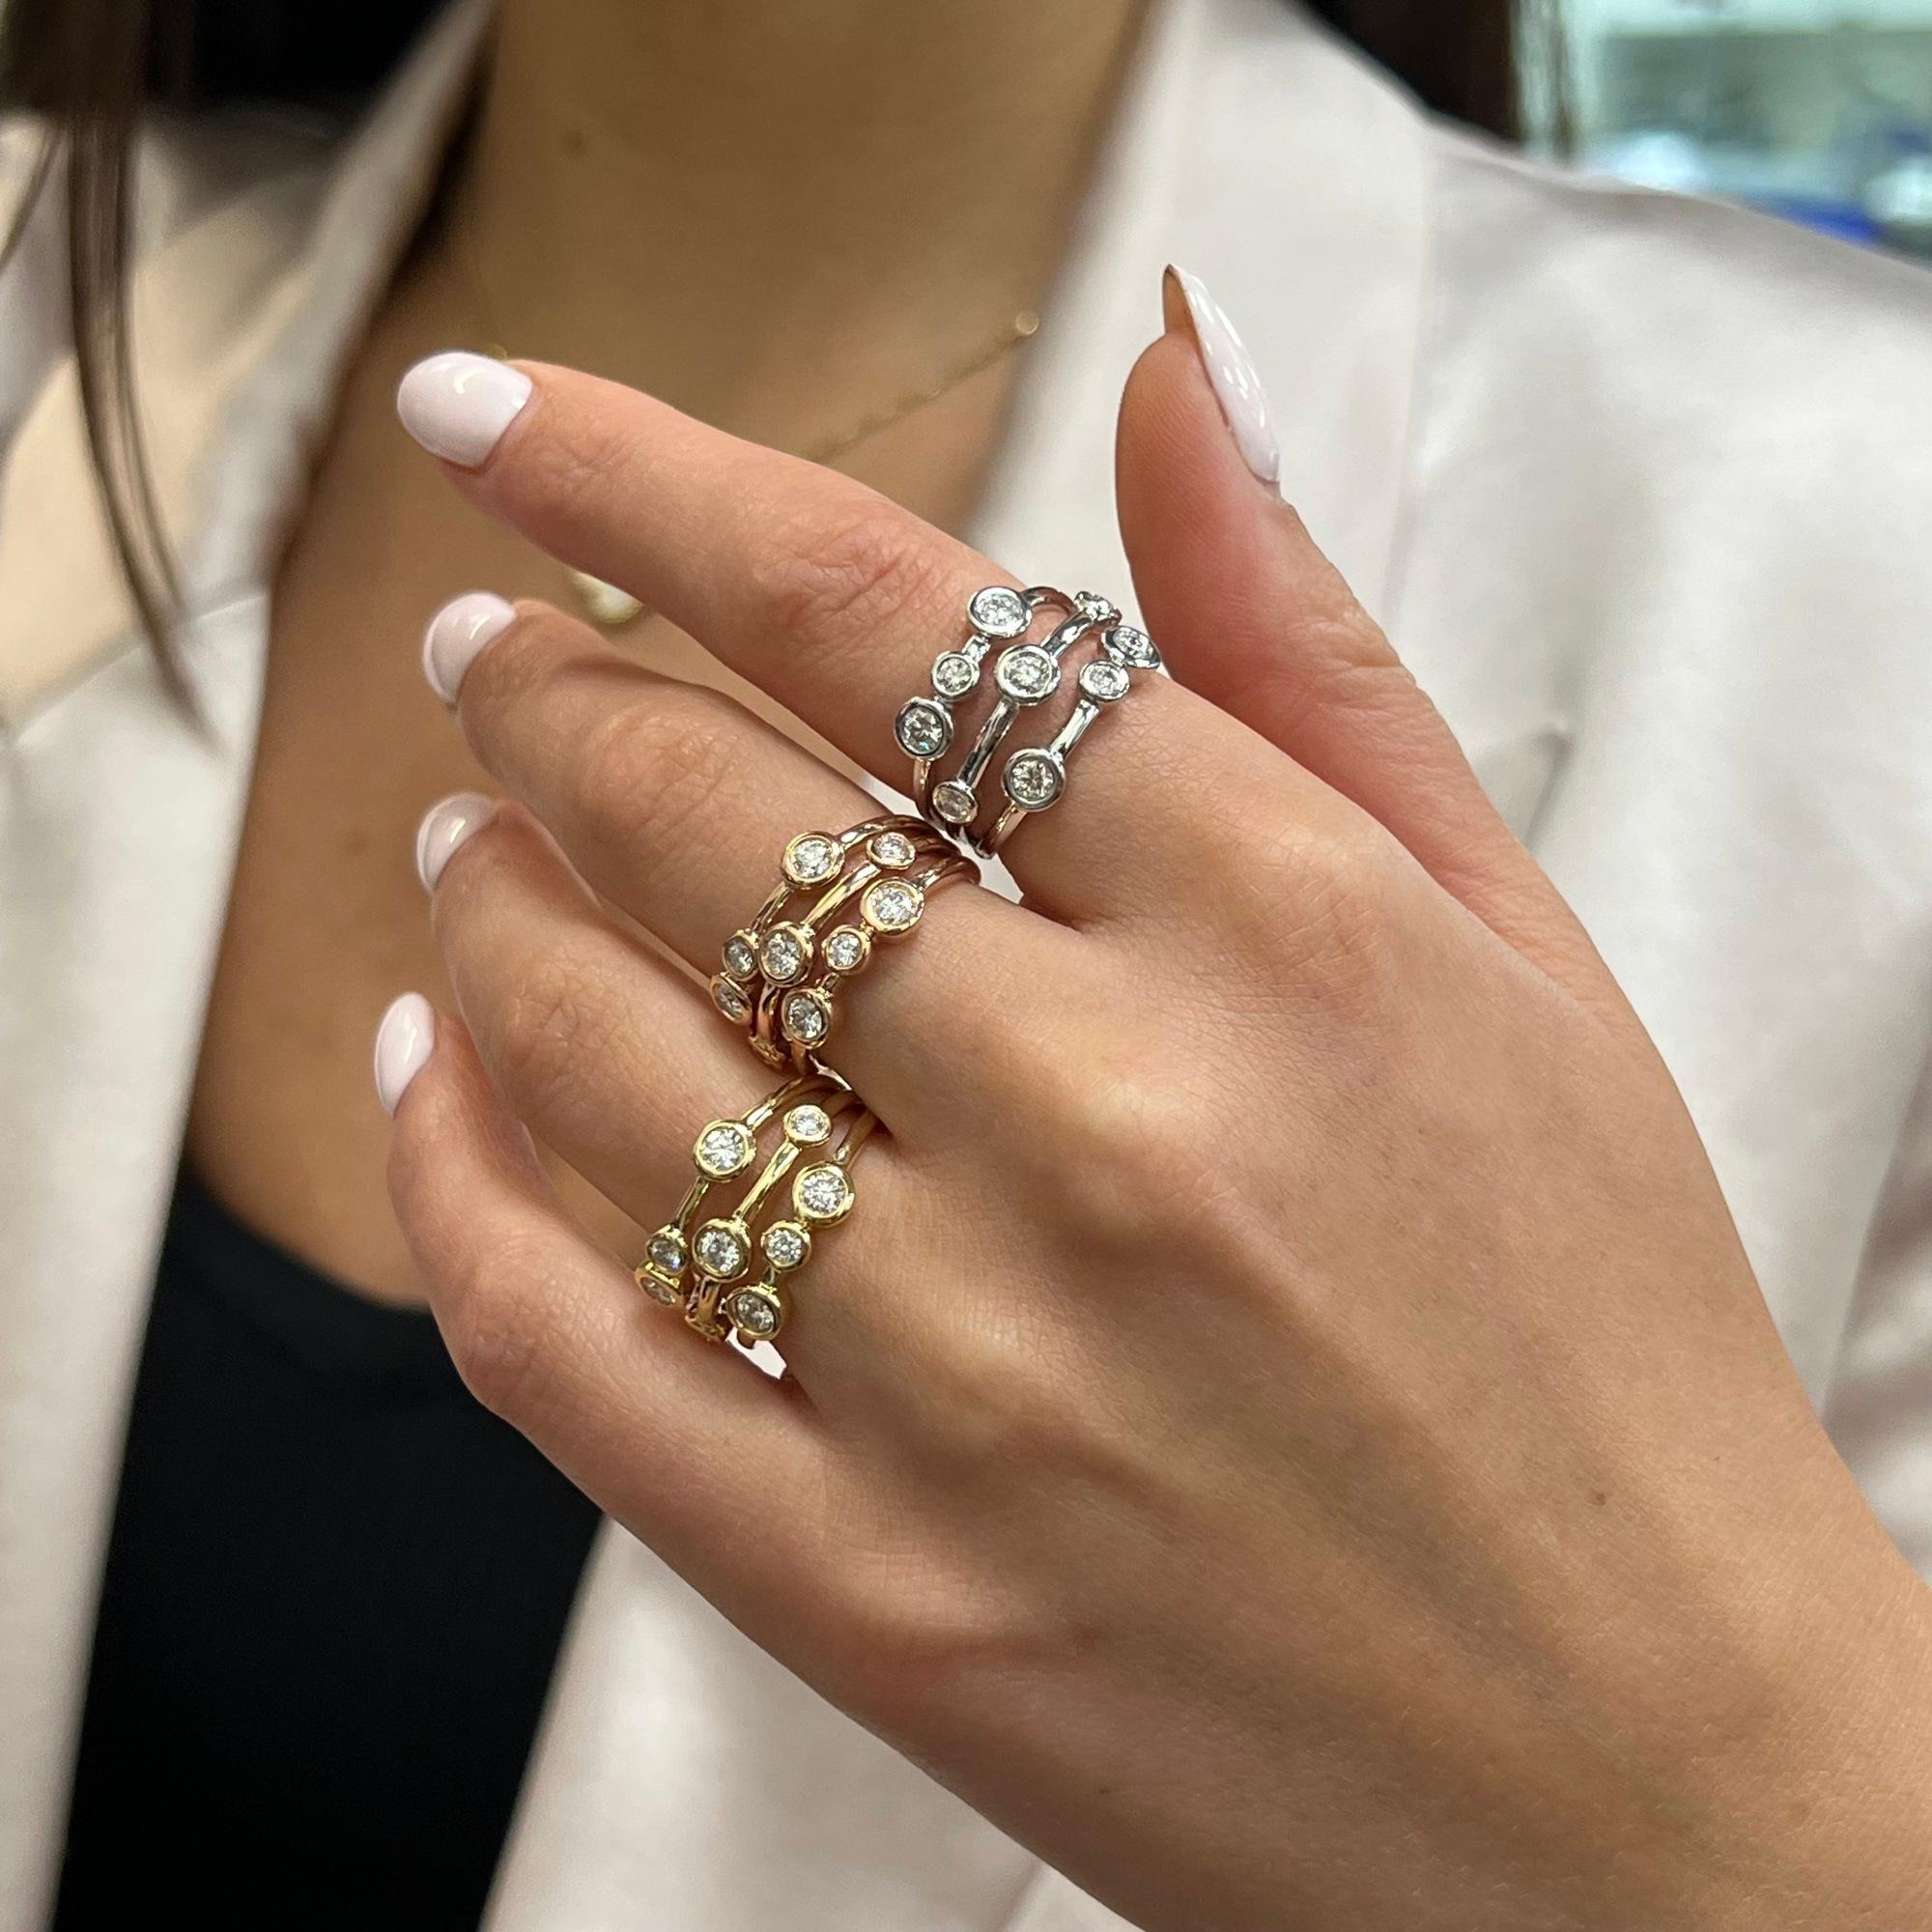 Rachel Koen Bezel Set Round Cut Diamond Fancy Ring 18k Rose Gold 0.68cttw In New Condition For Sale In New York, NY